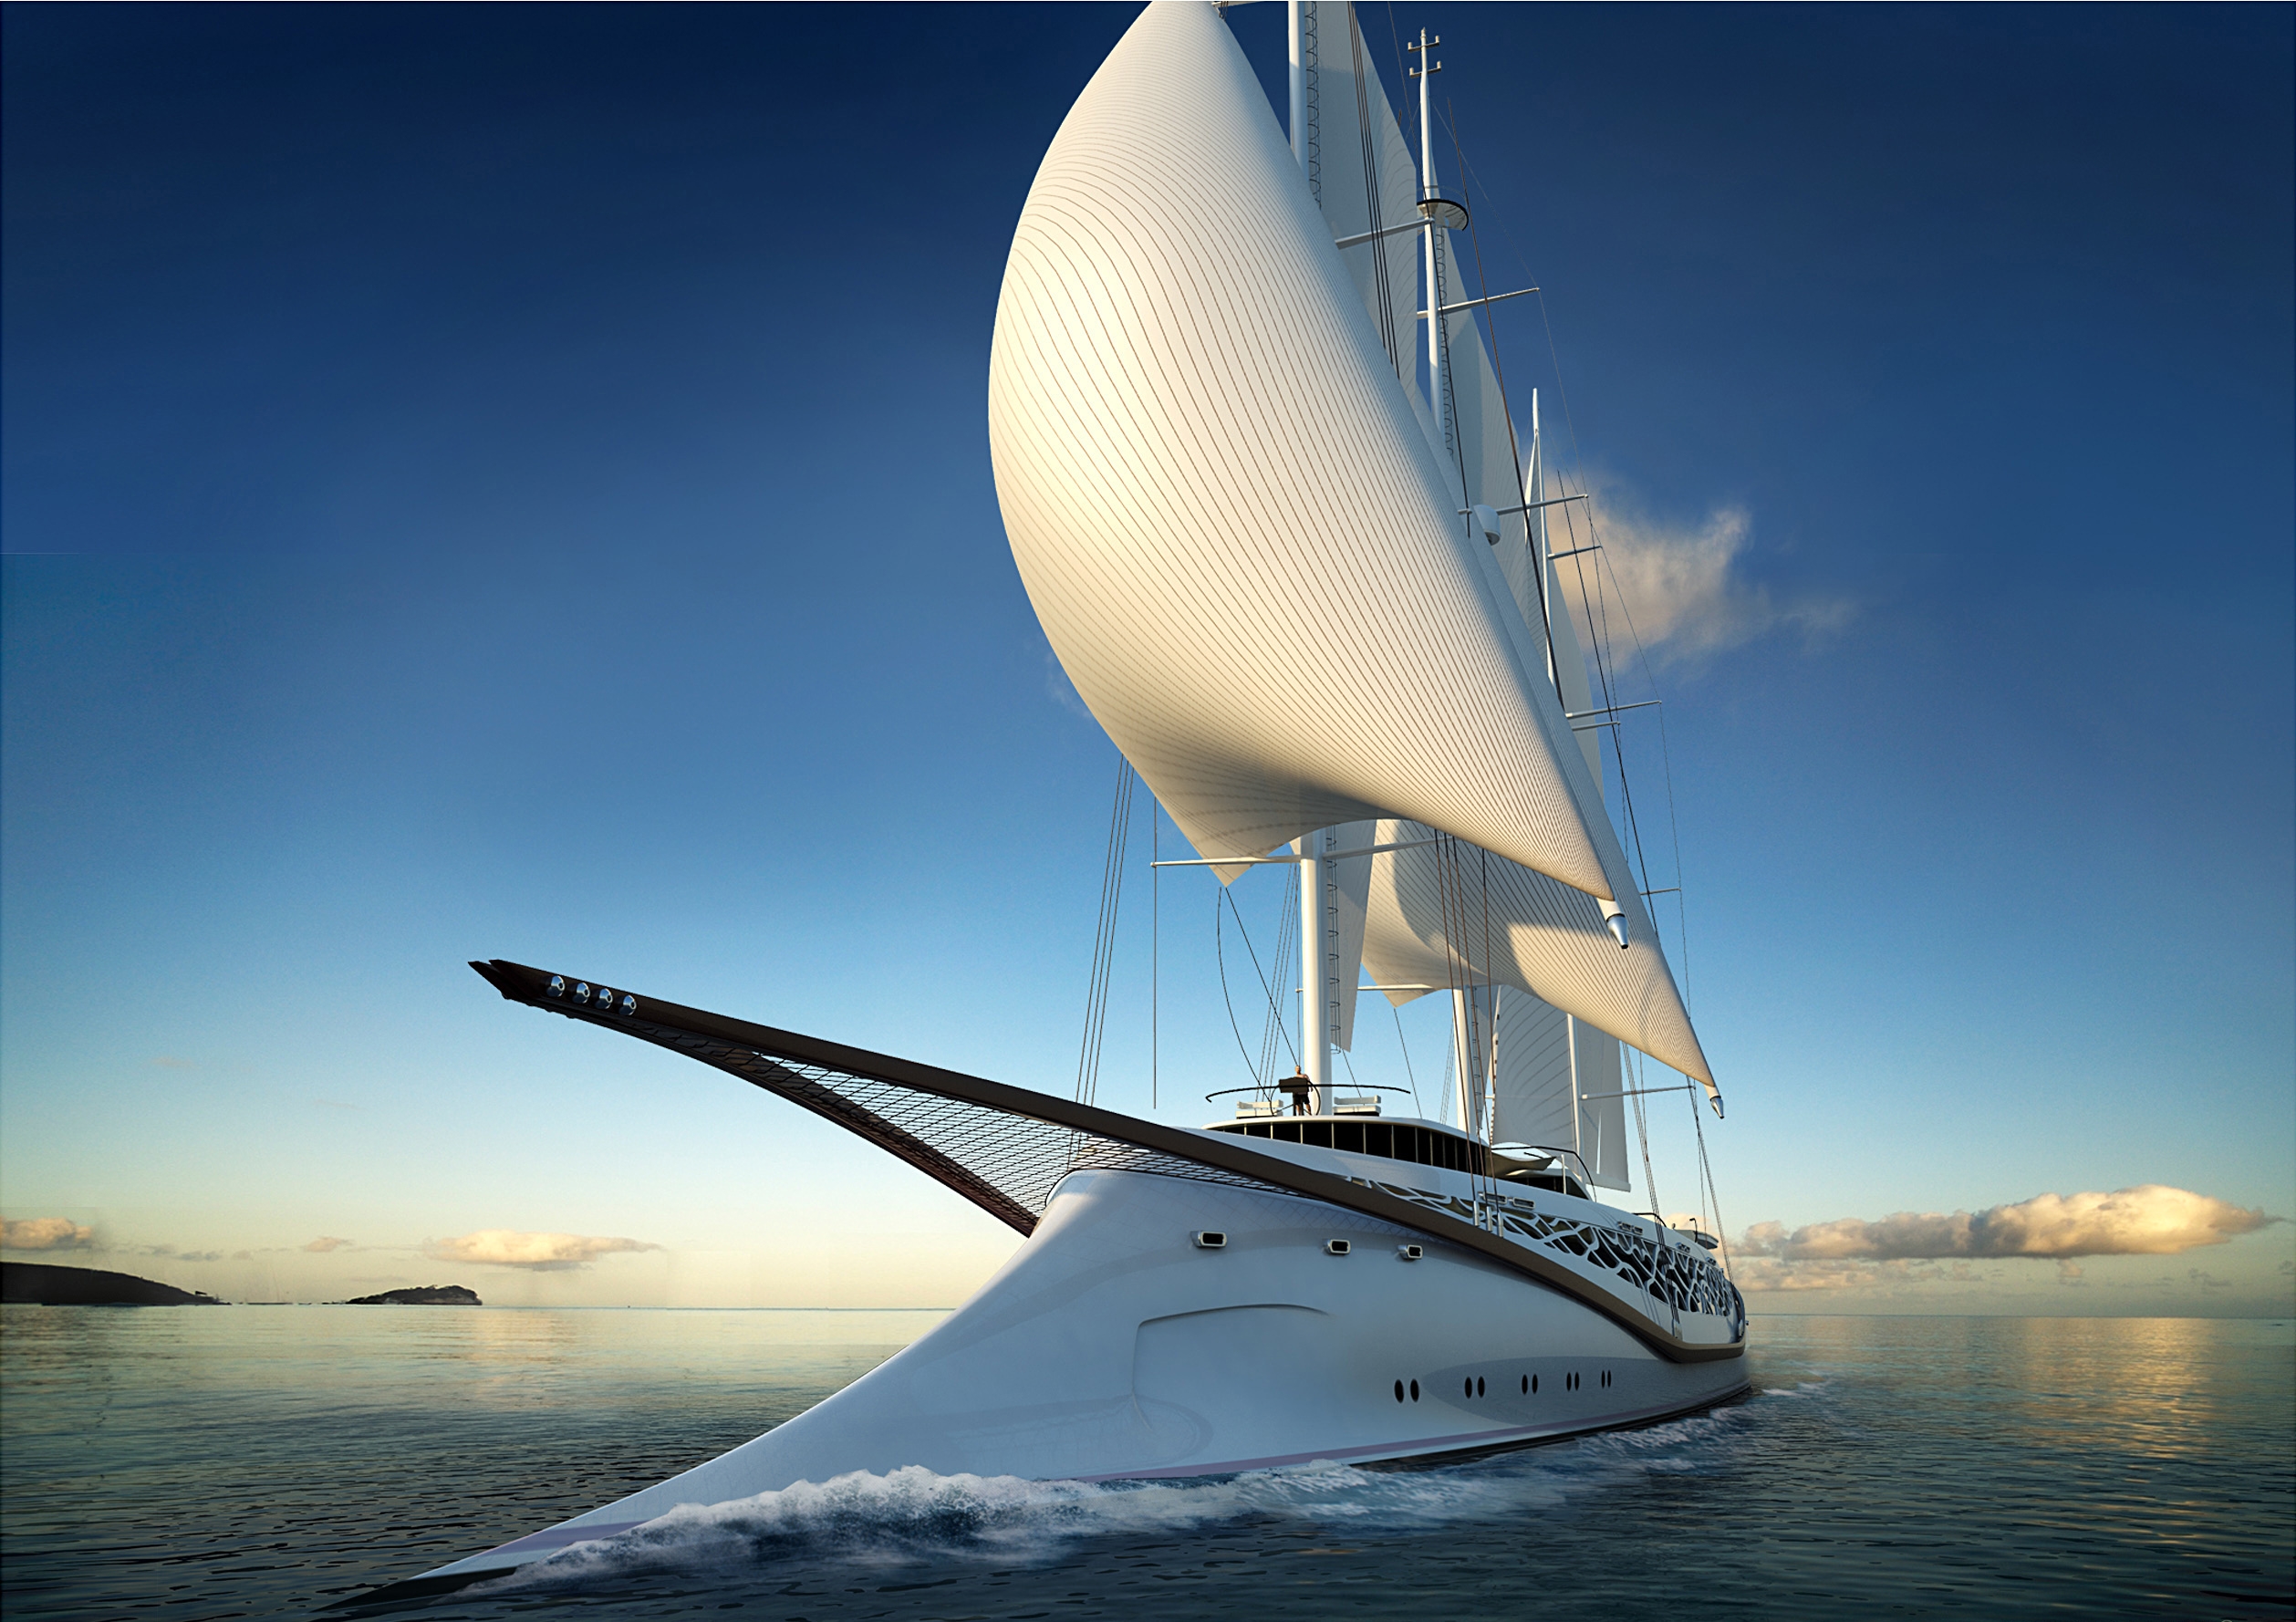 yacht, relaxation, sails, rest, miscellanea, miscellaneous, ocean, journey, sail